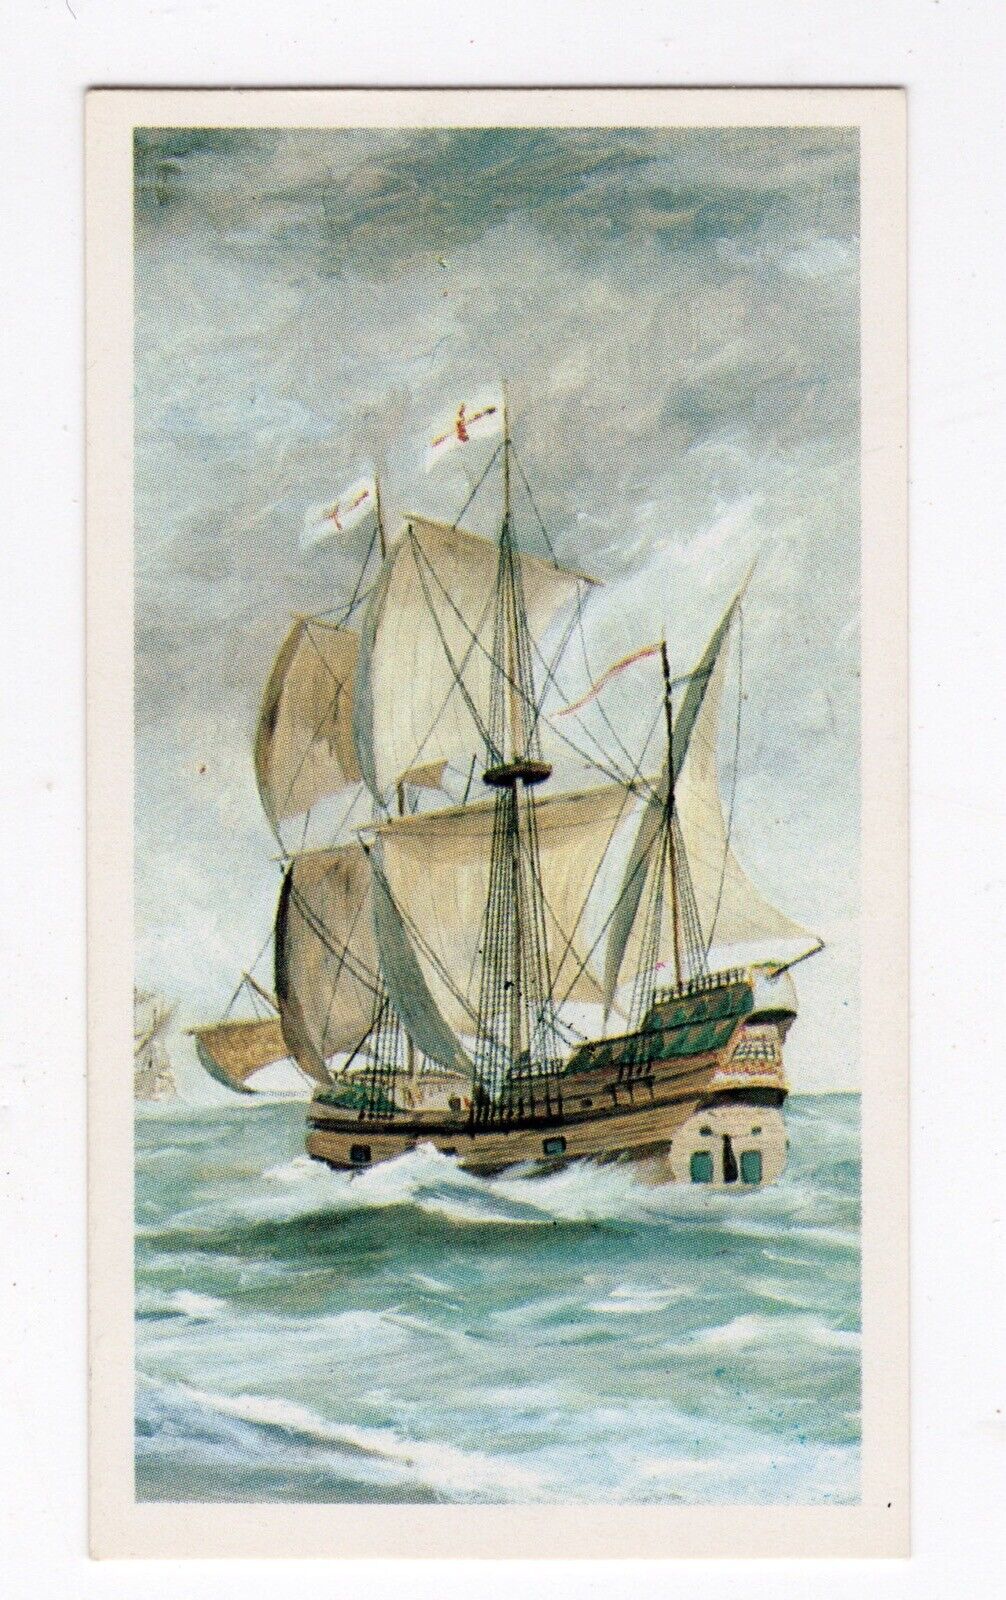 Golden Age of sail. Elizabethan Galleon 1588